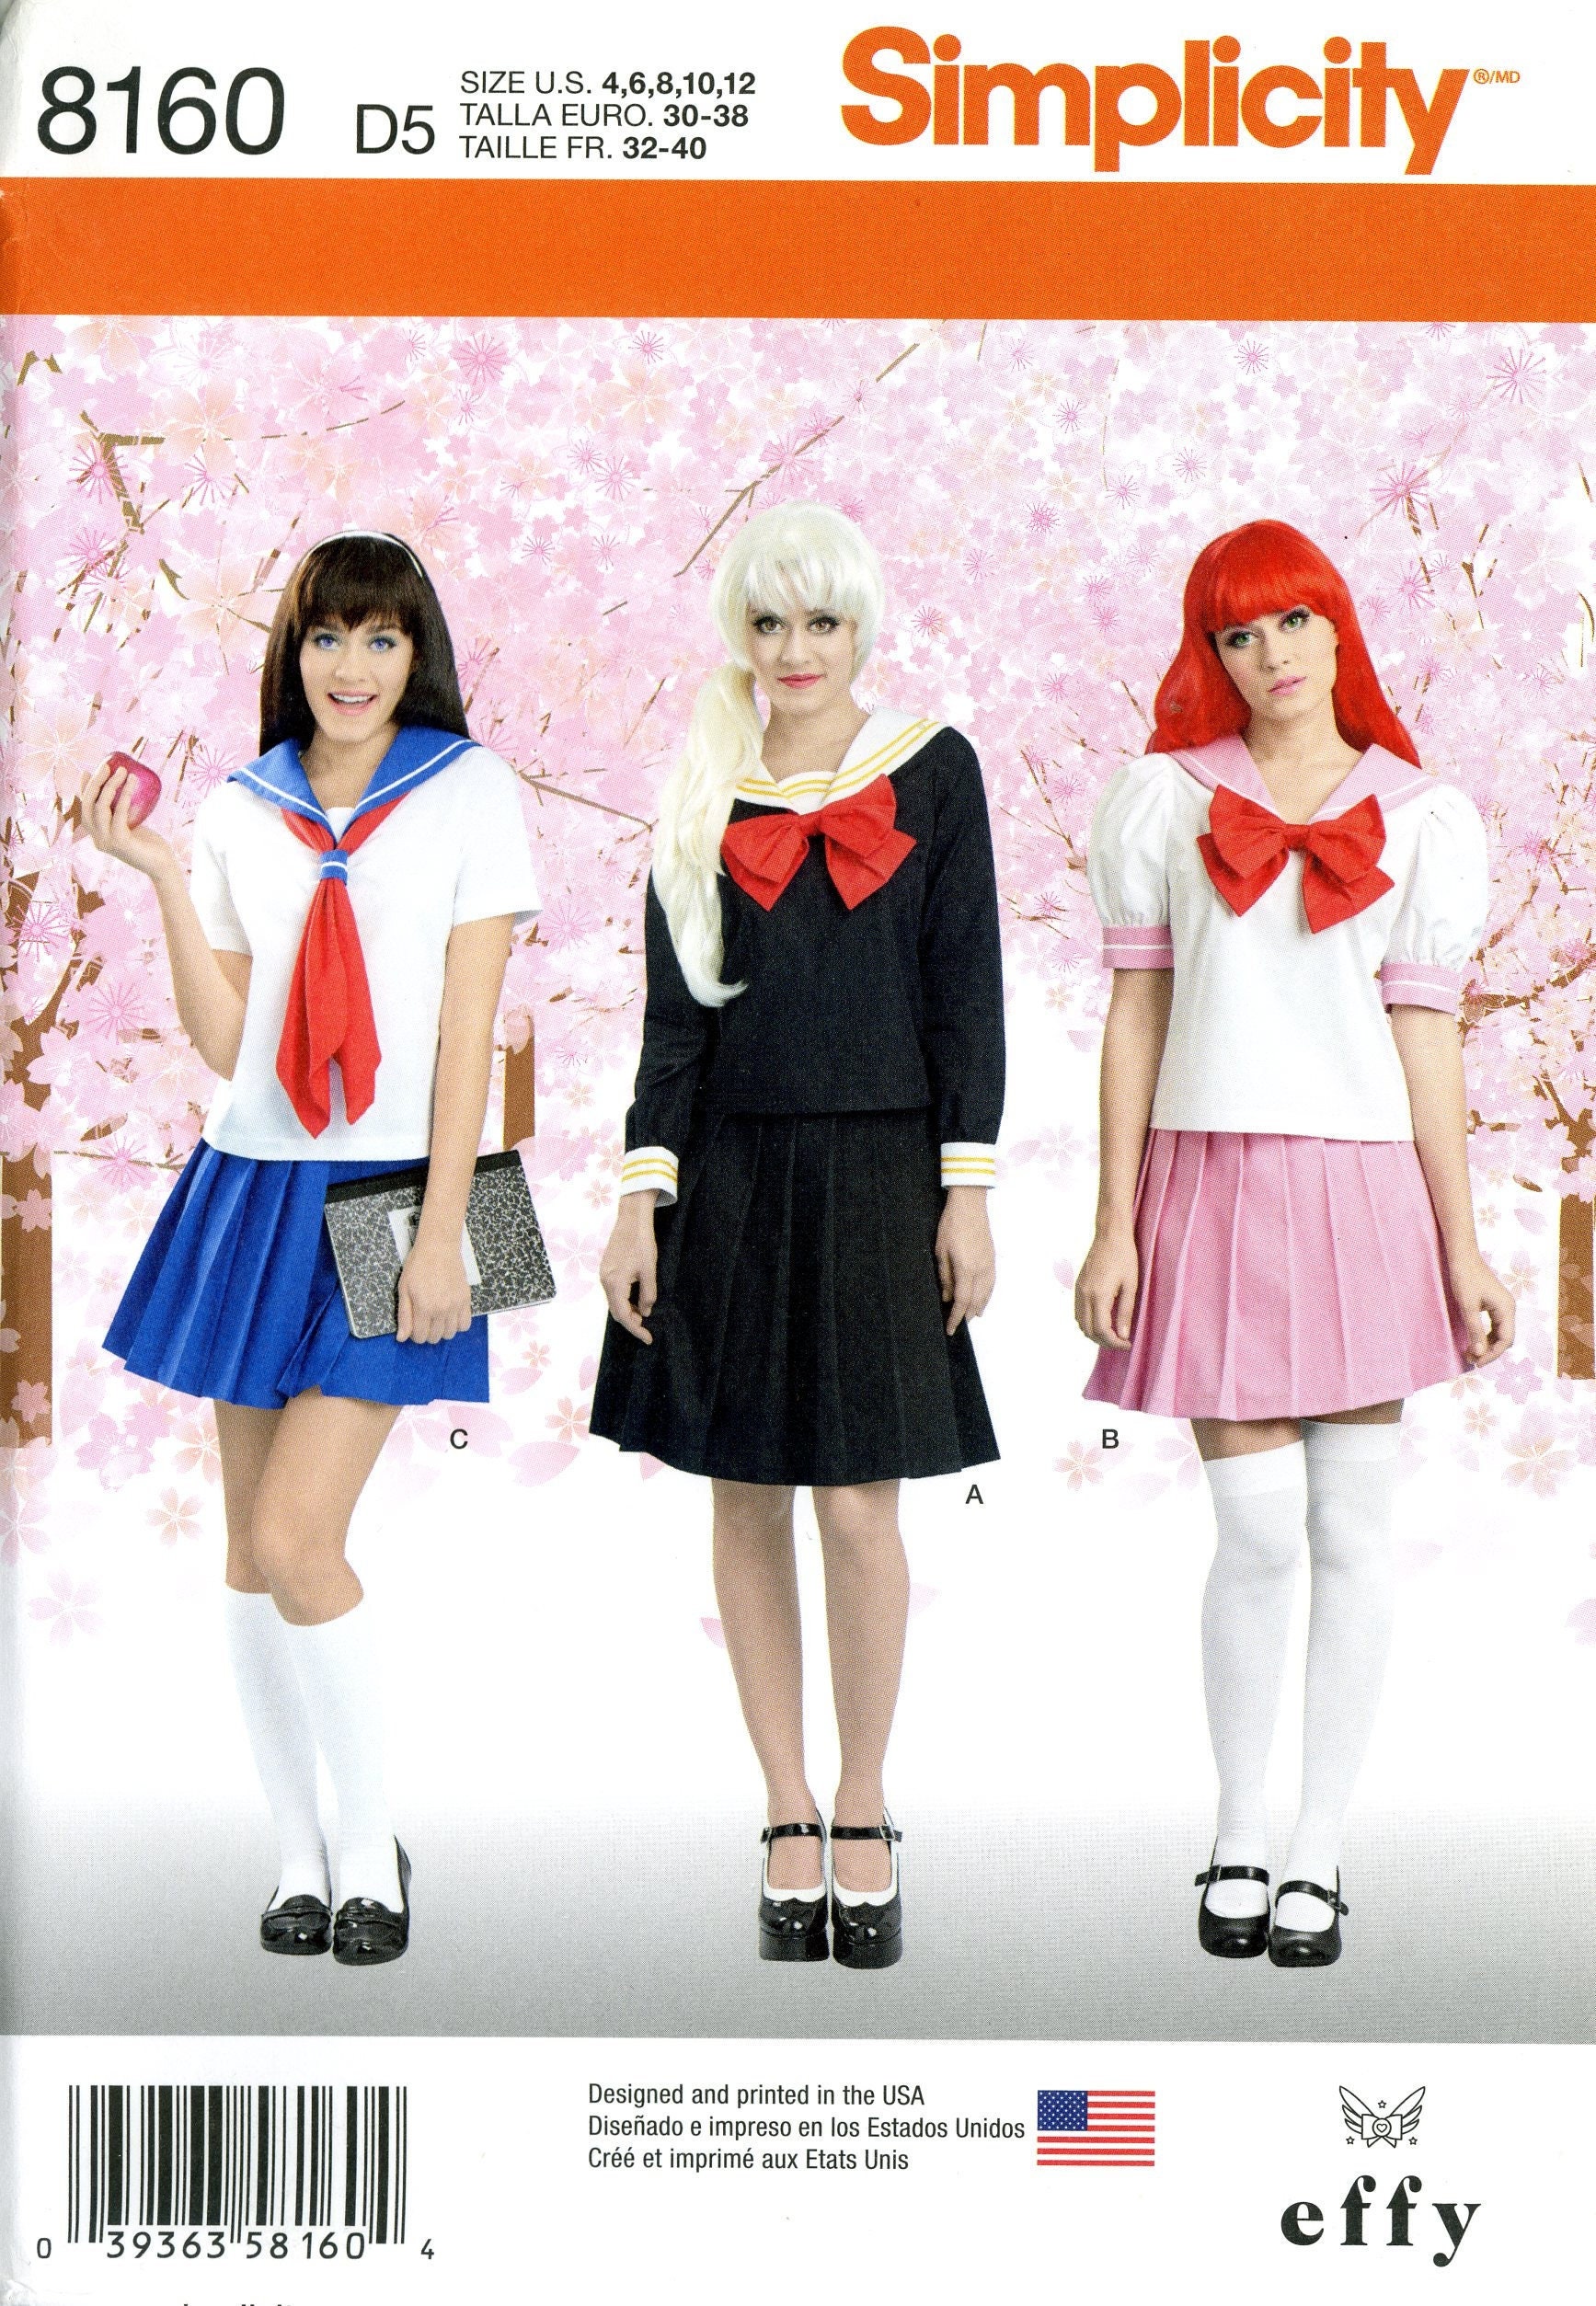 Anime School Girl Costume Japanese Schoolgirl Uniform Cosplay Lingerie   YOMORIO